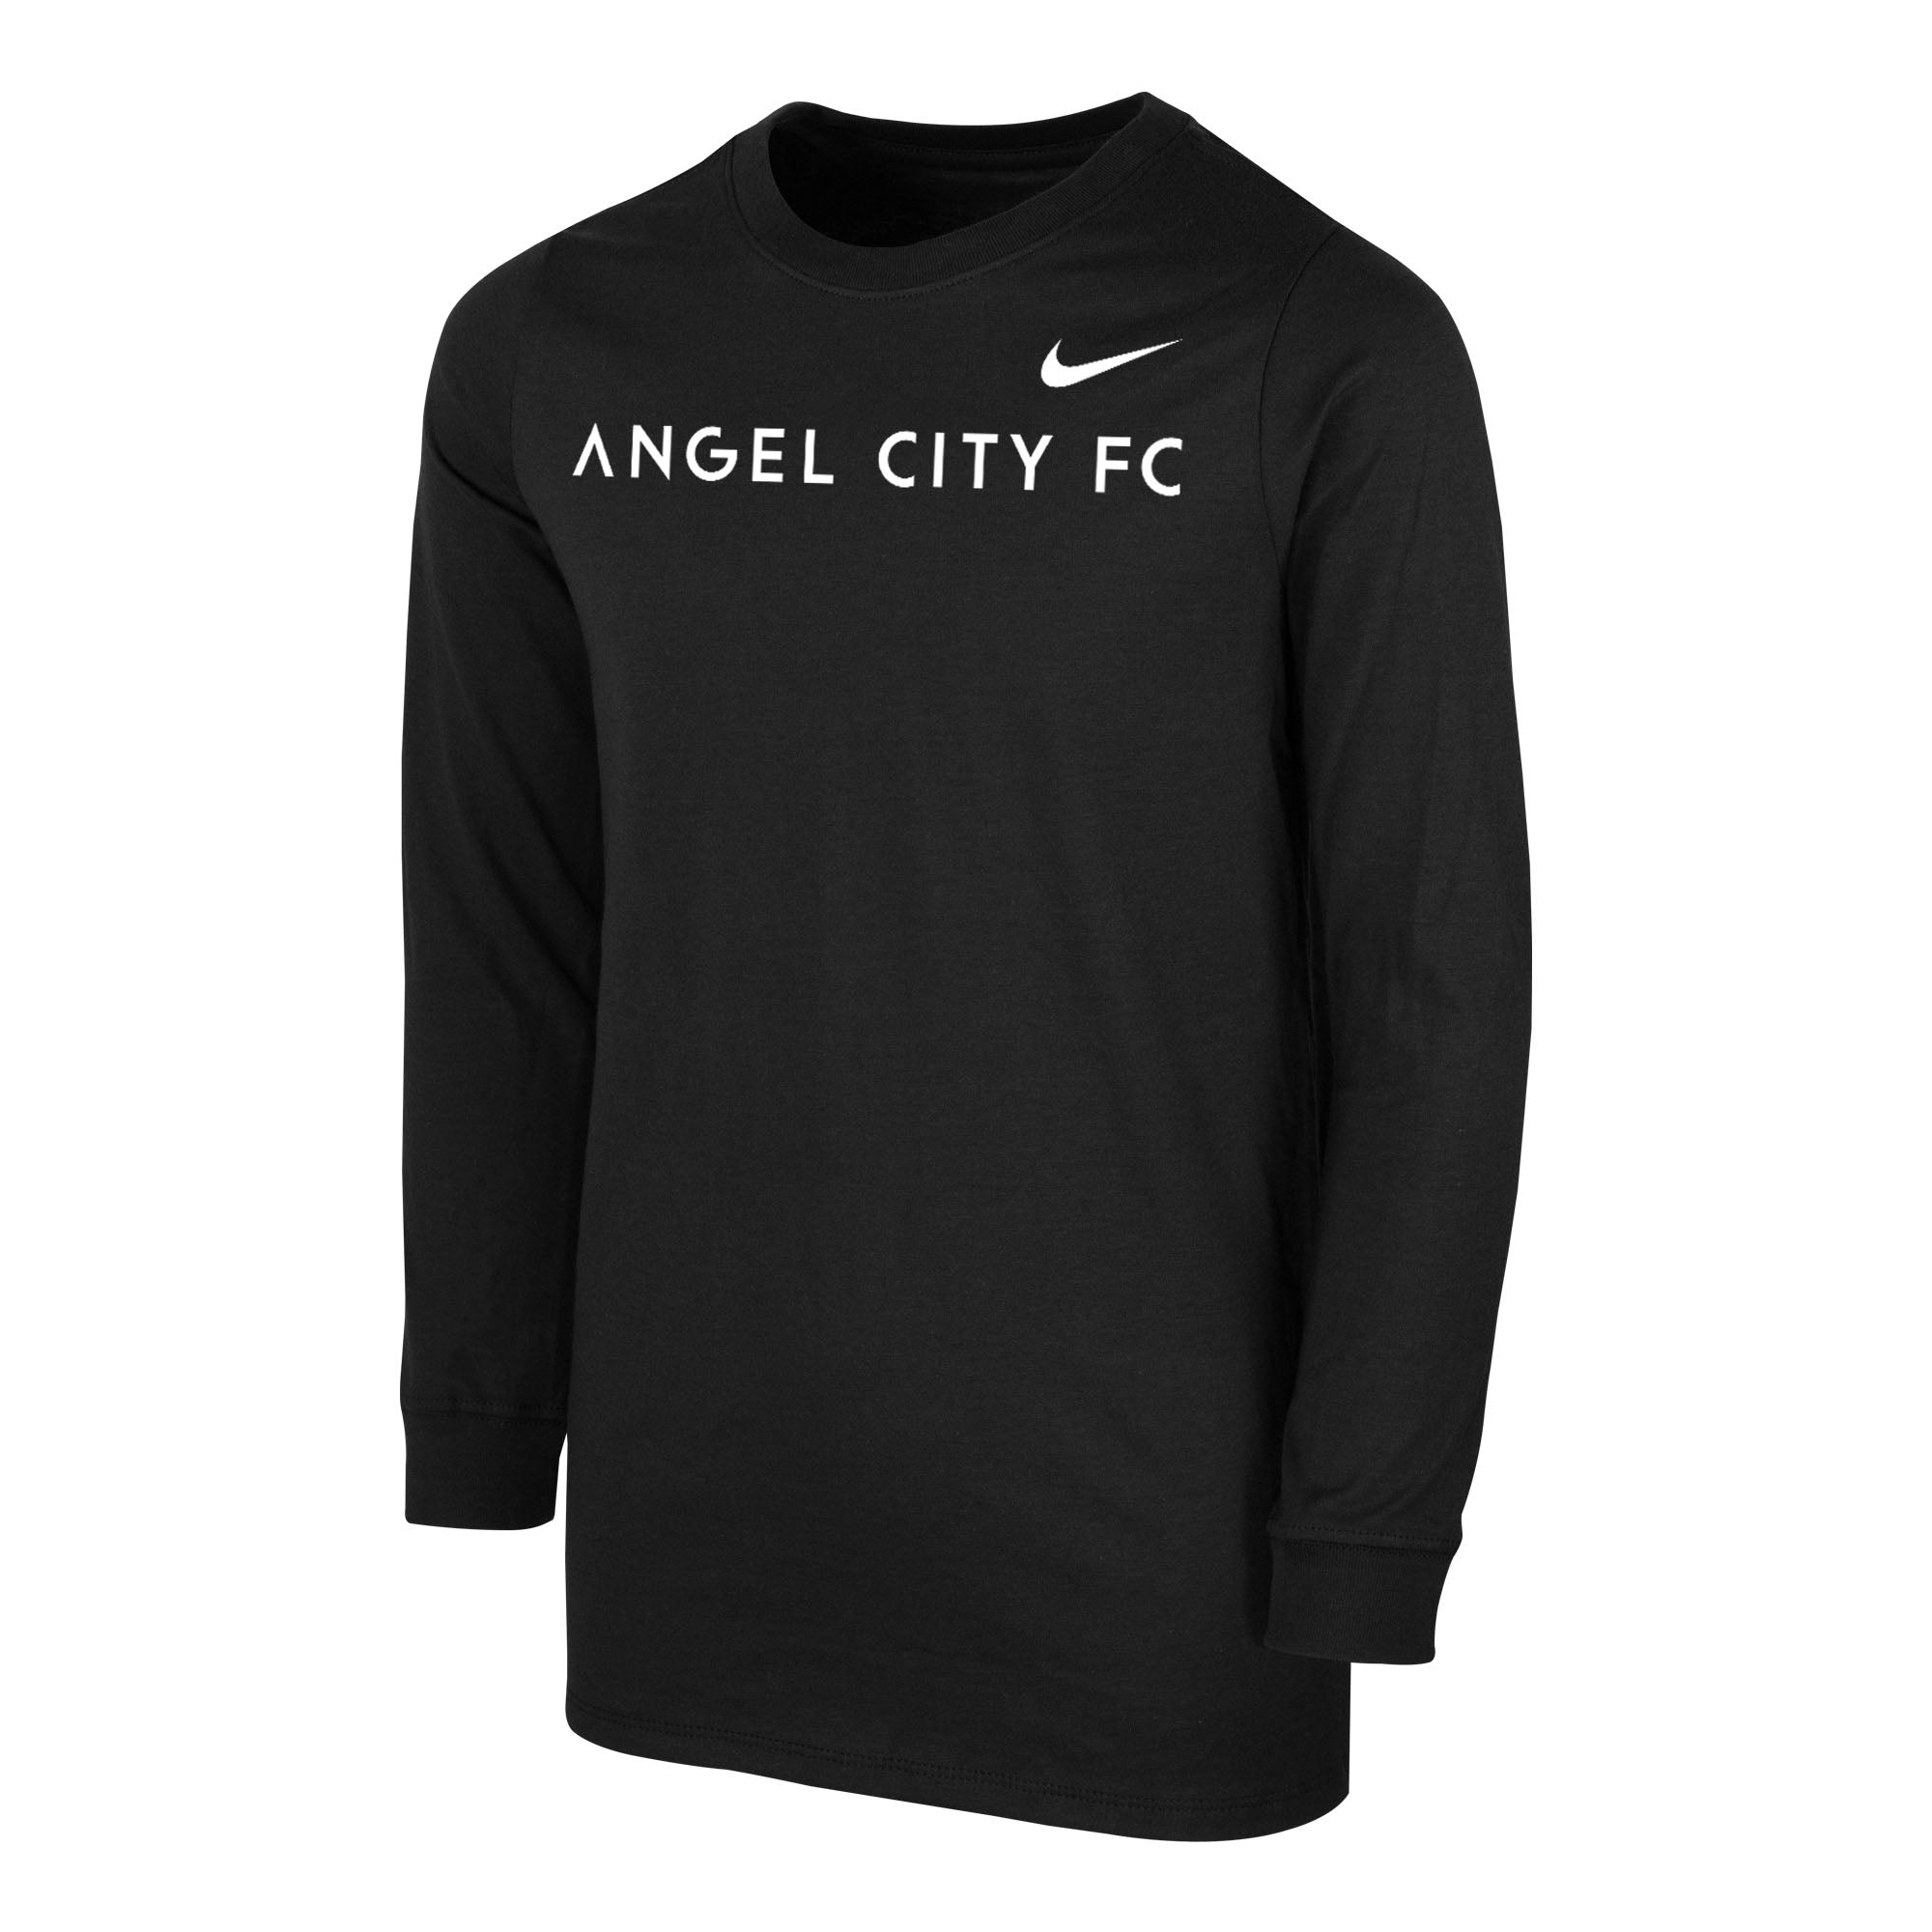 Angel City FC Nike camiseta negra de manga larga para jóvenes